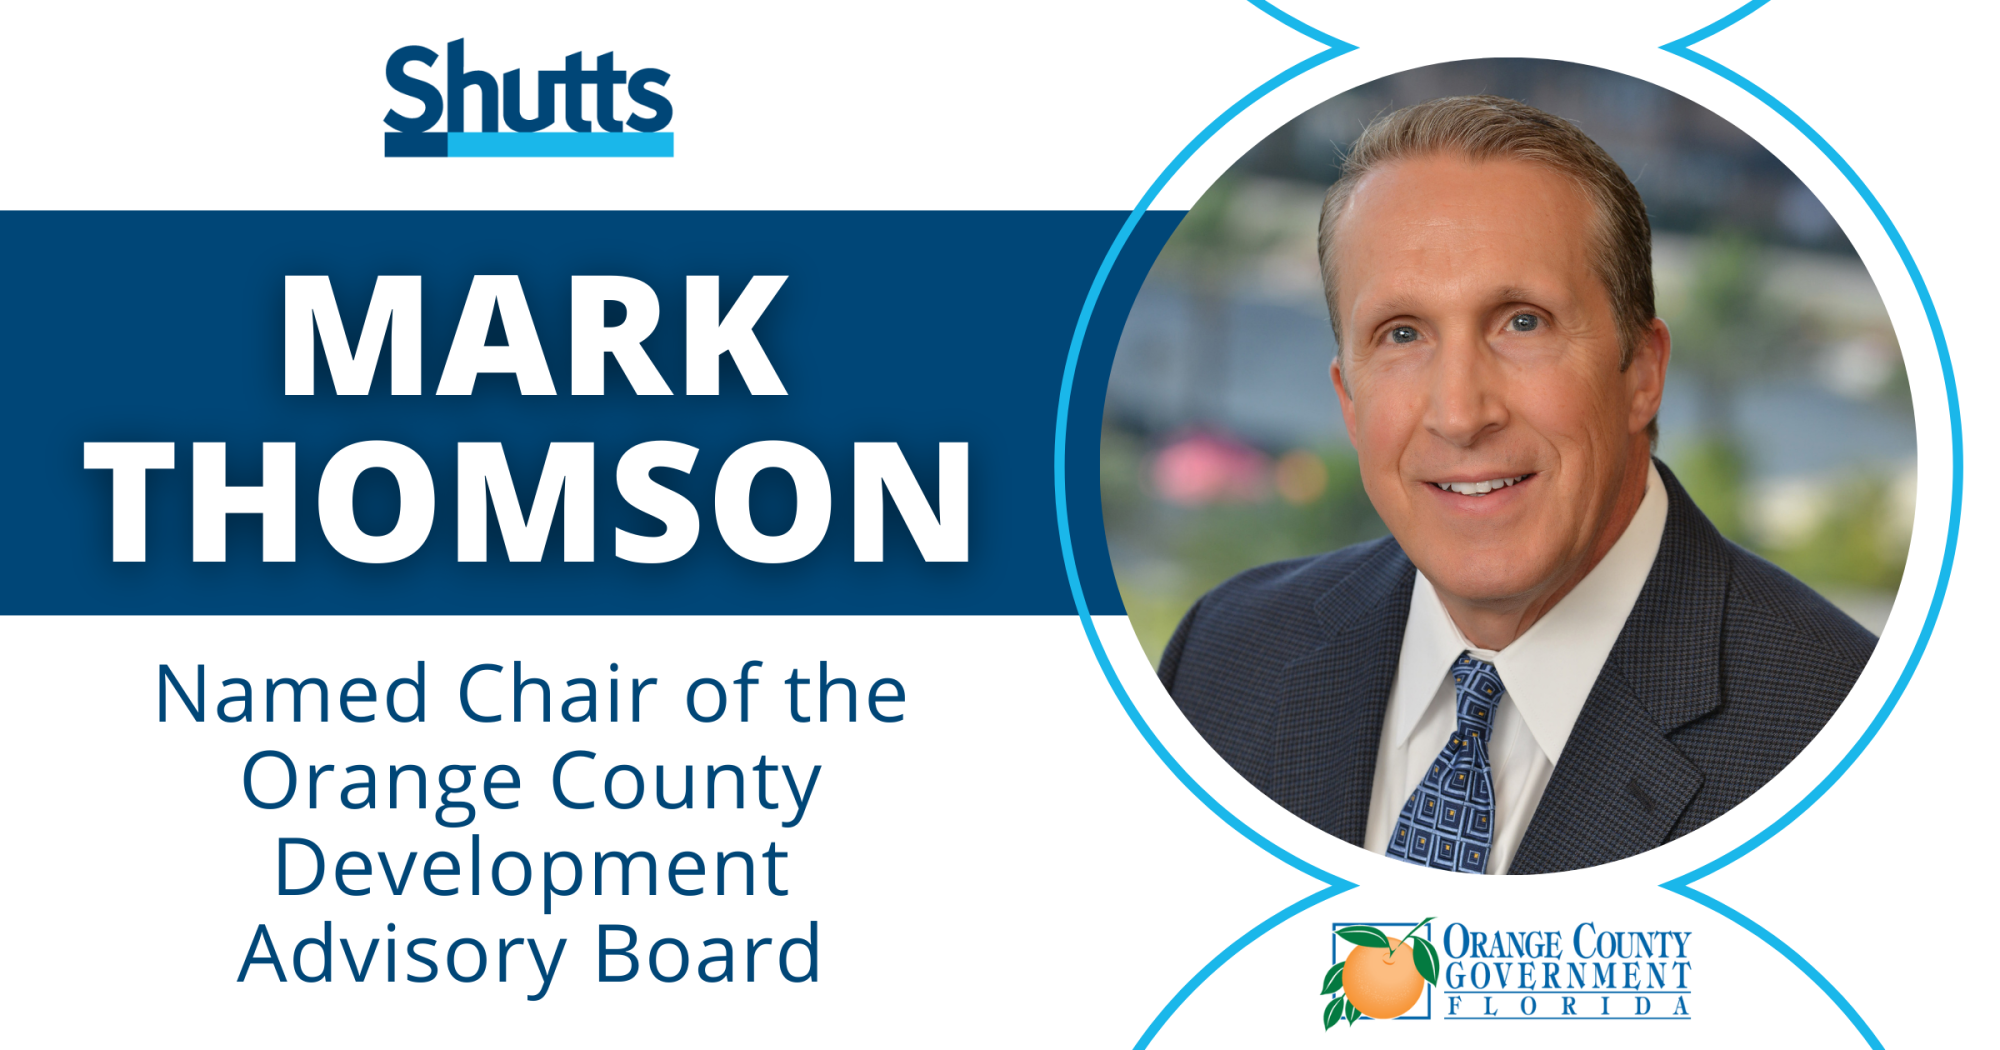 Mark Thomson Named Chair of the Orange County Development Advisory Board